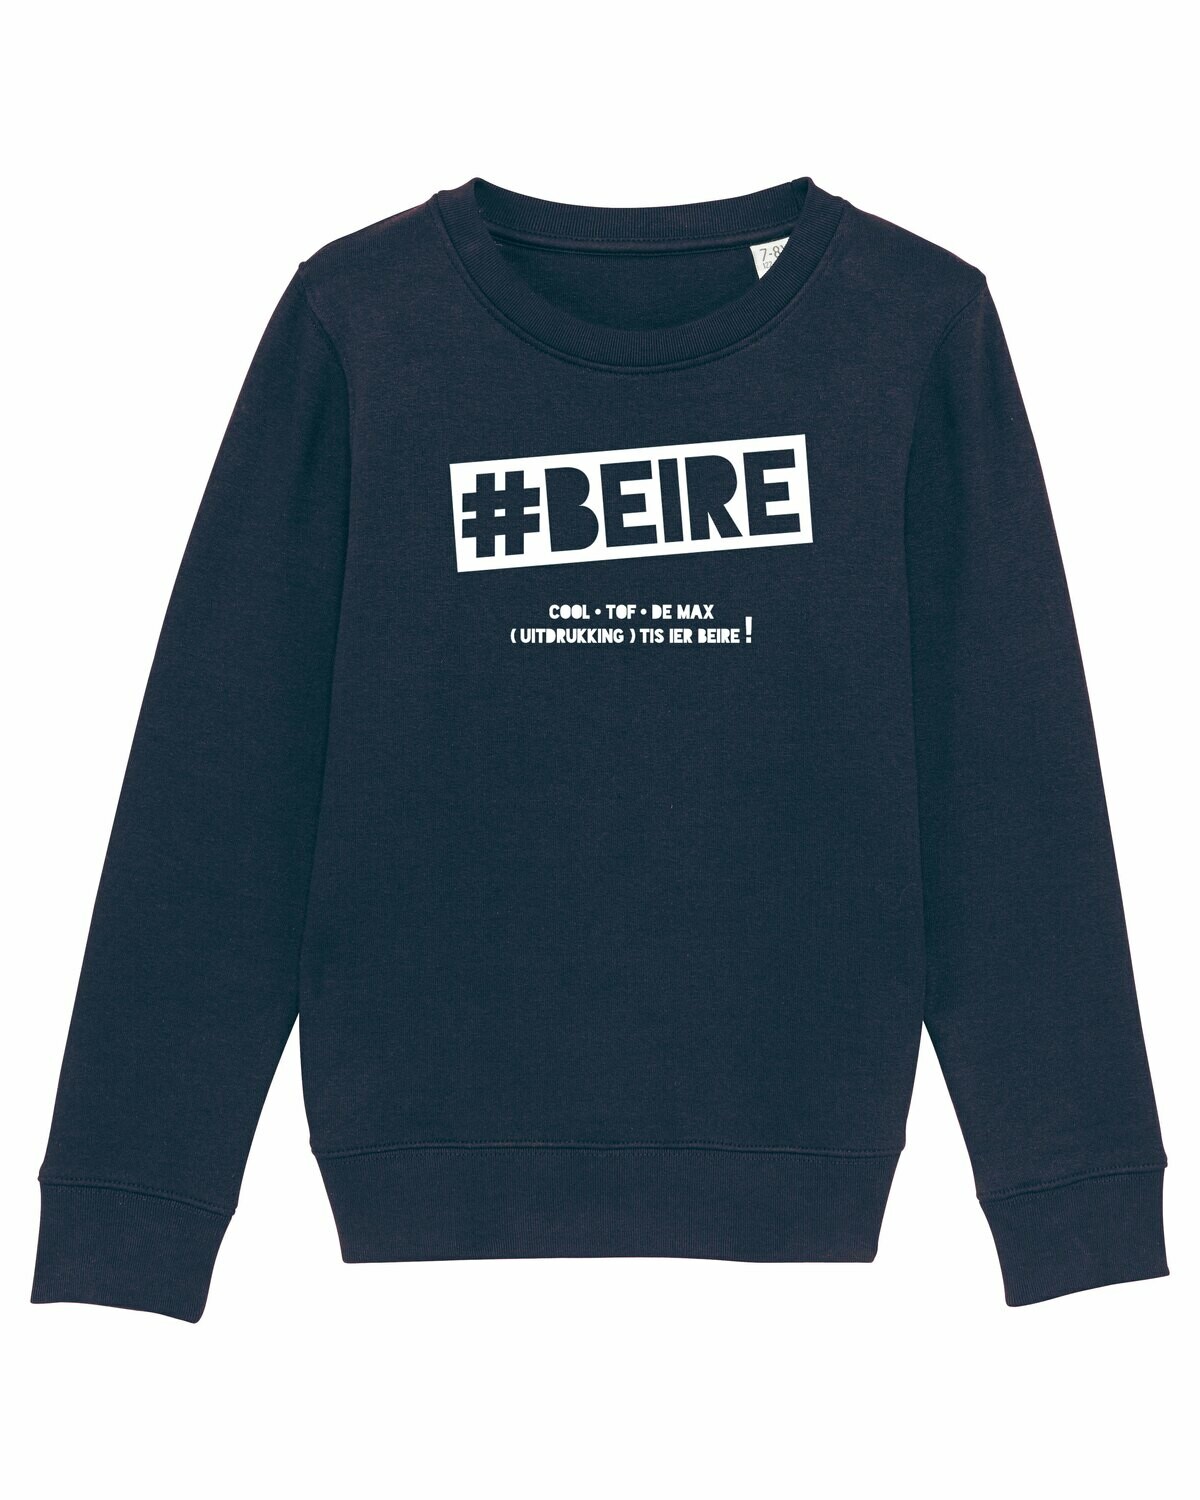 Kids Sweater #Beire